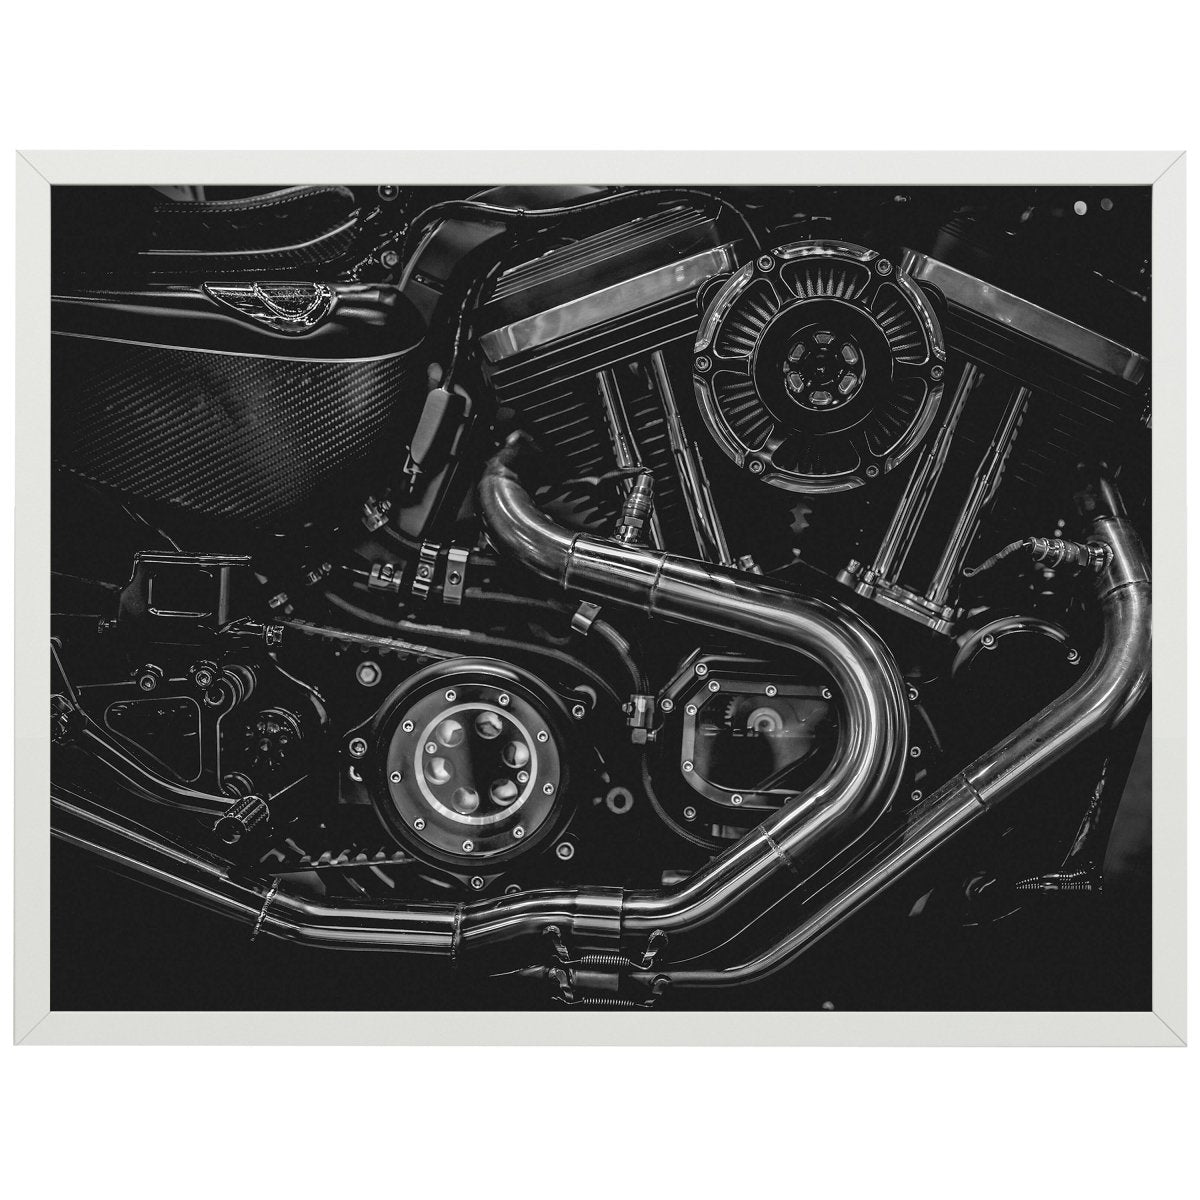 wandmotiv24 Poster, Poster - Motorrad, Motor, schwarz - M0278 - Bild 1